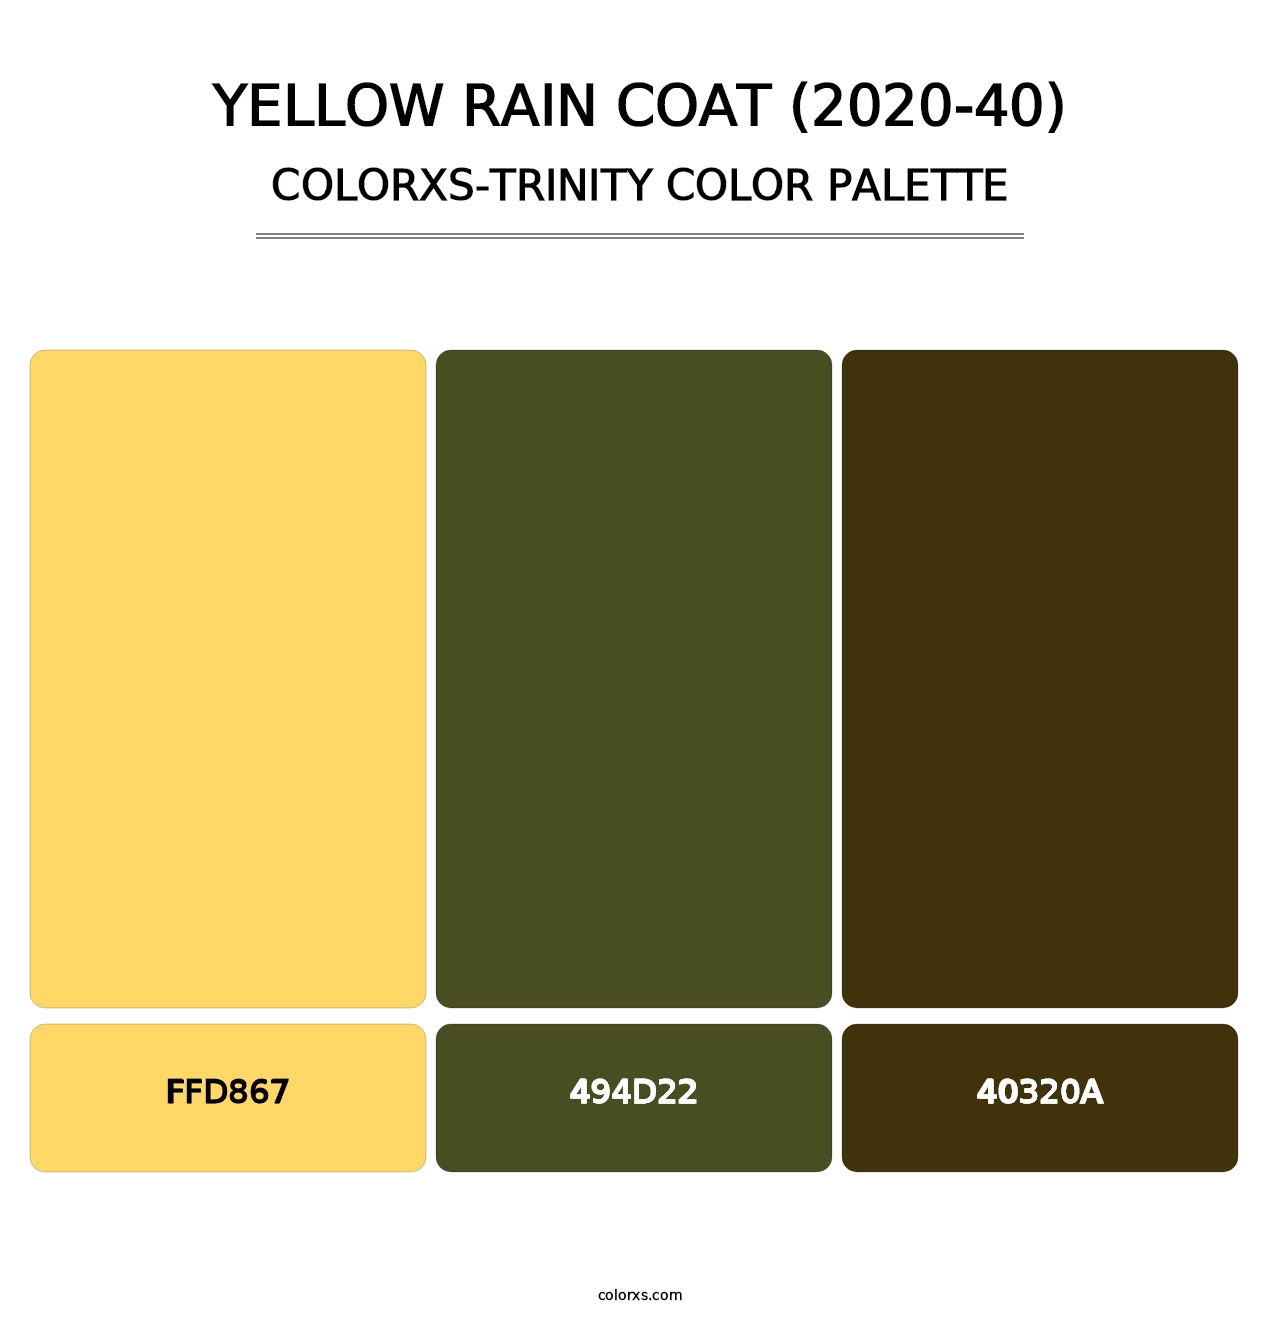 Yellow Rain Coat (2020-40) - Colorxs Trinity Palette